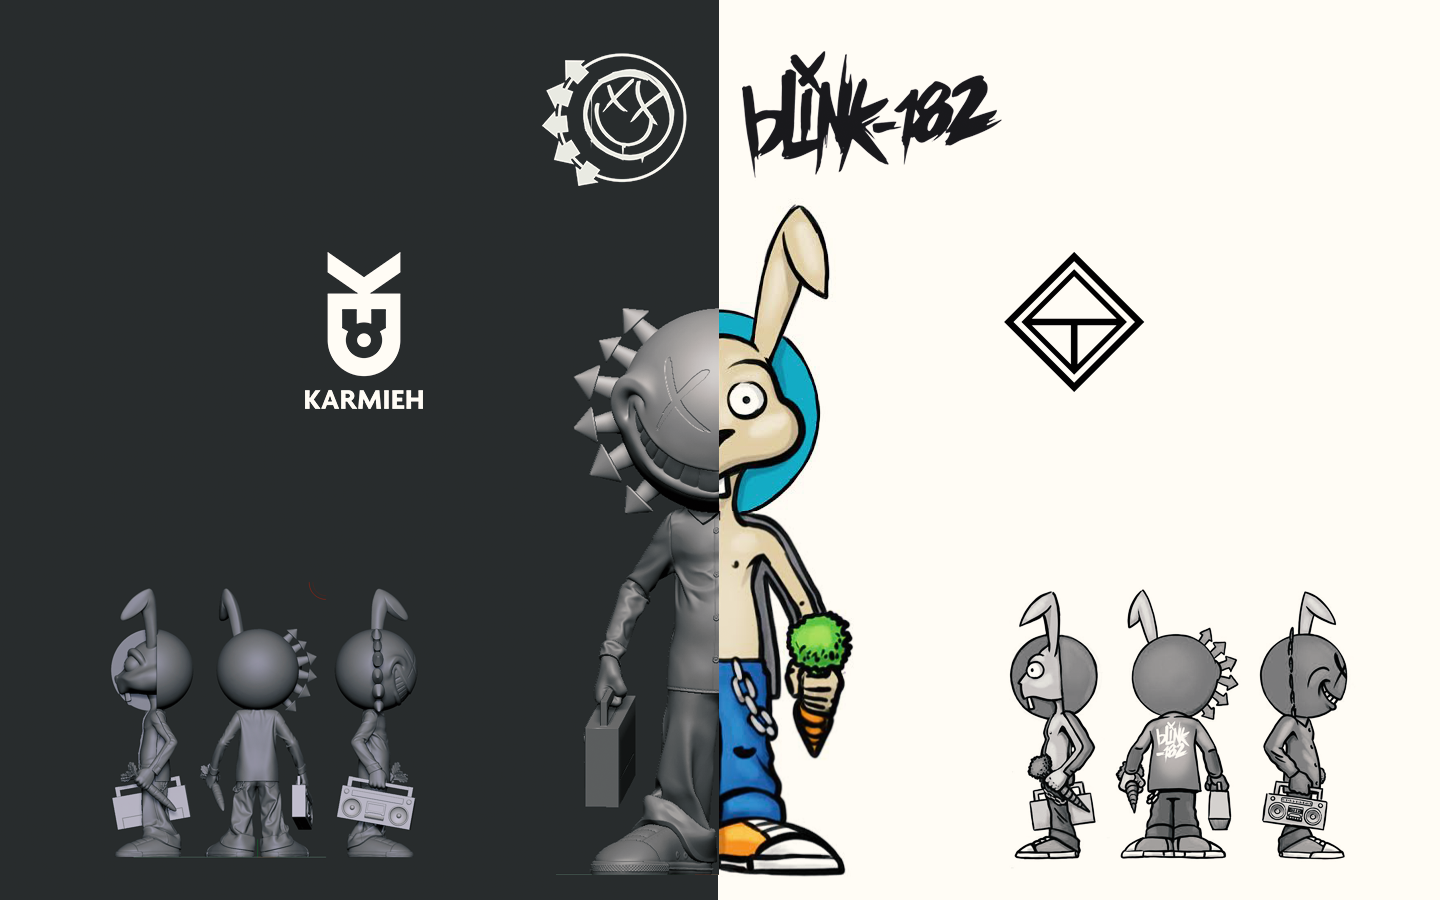 Blink-182 x Tsurt x Karmieh Toy Design - Split Personality mascot